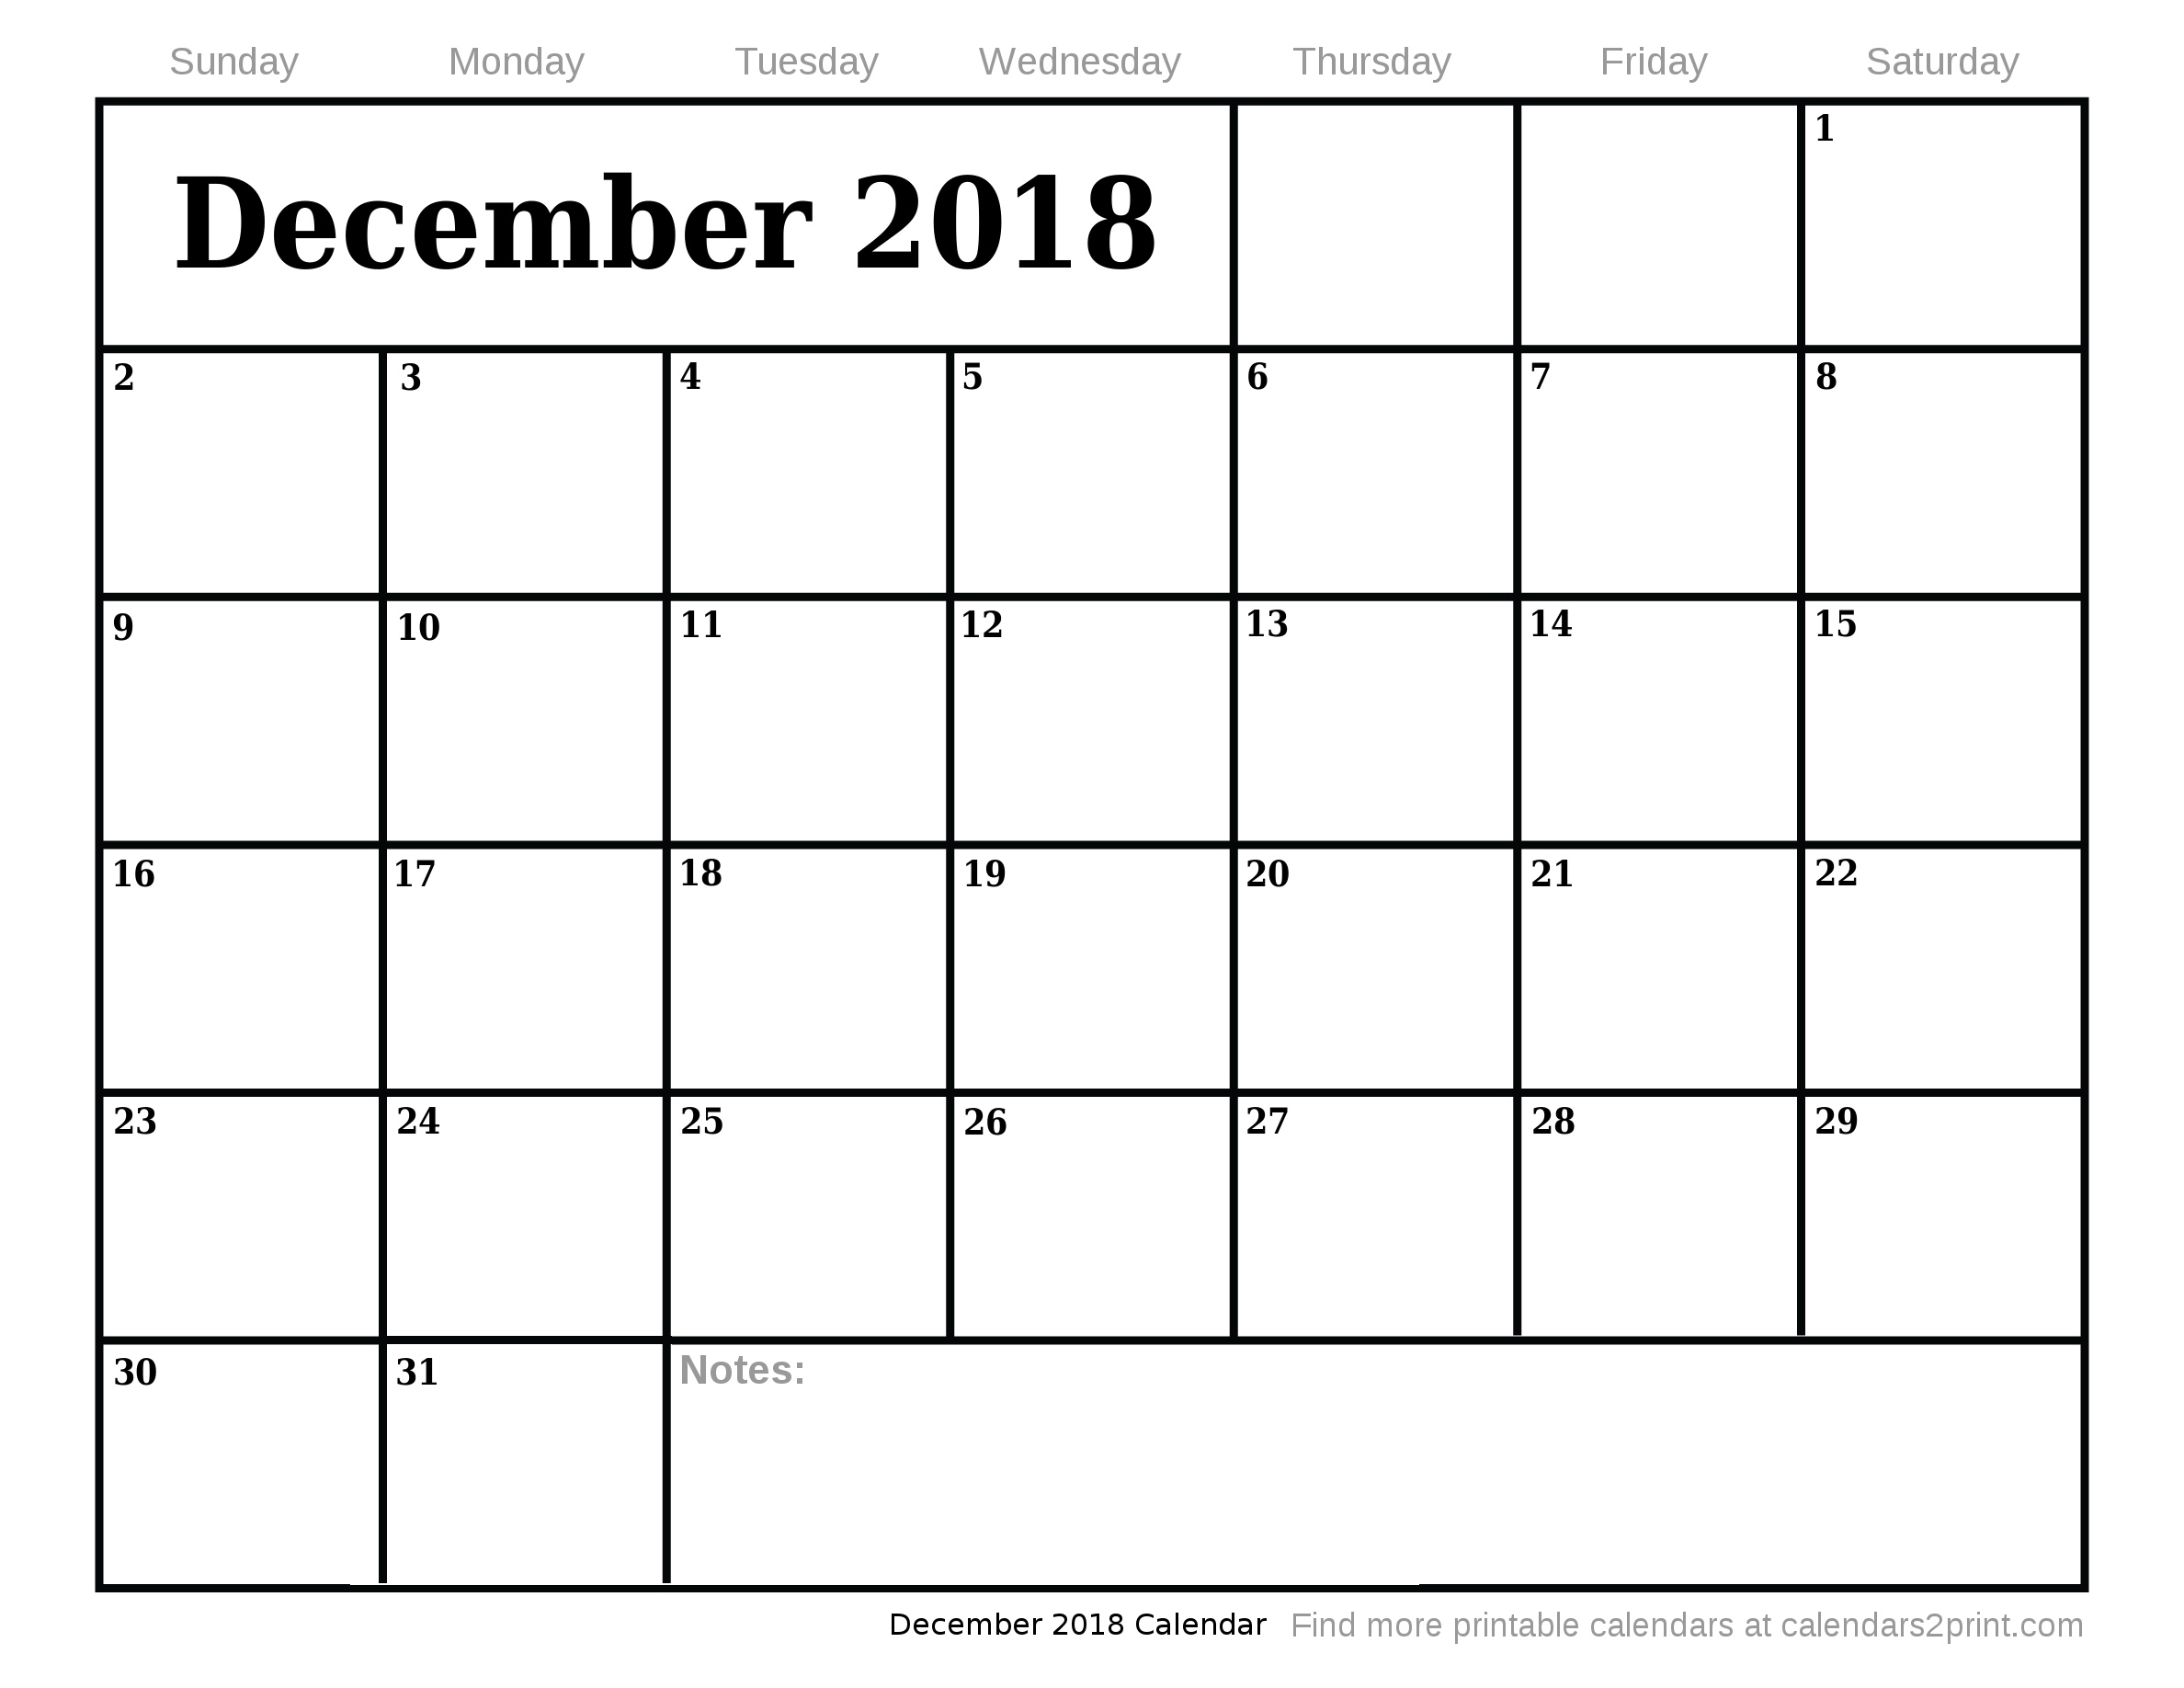 Dec 2018 Printable Calendar